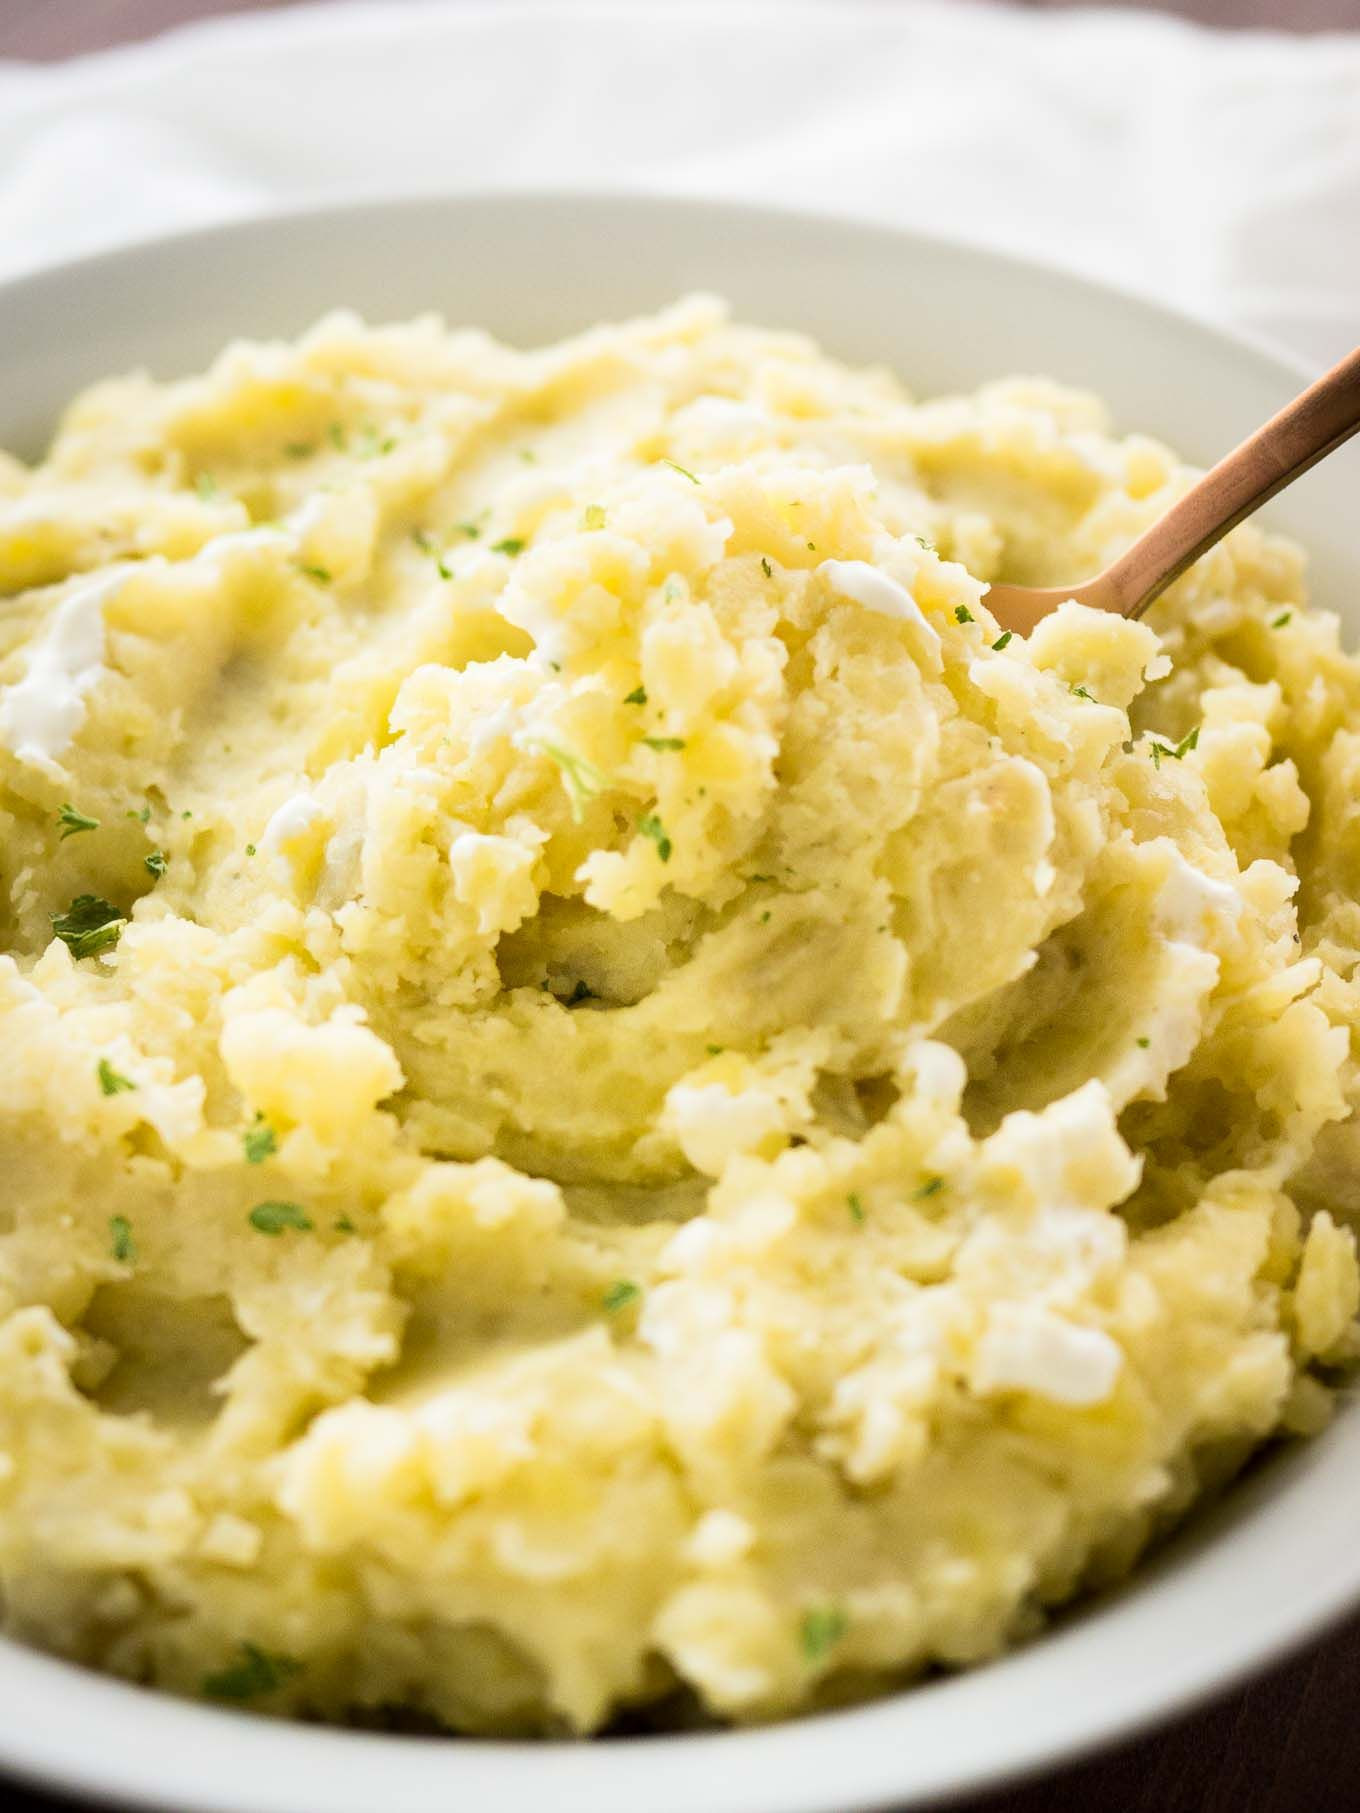 Make Ahead Crock Pot Mashed Potatoes
 This Creamy Crock Pot Mashed Potatoes Recipe is SO easy